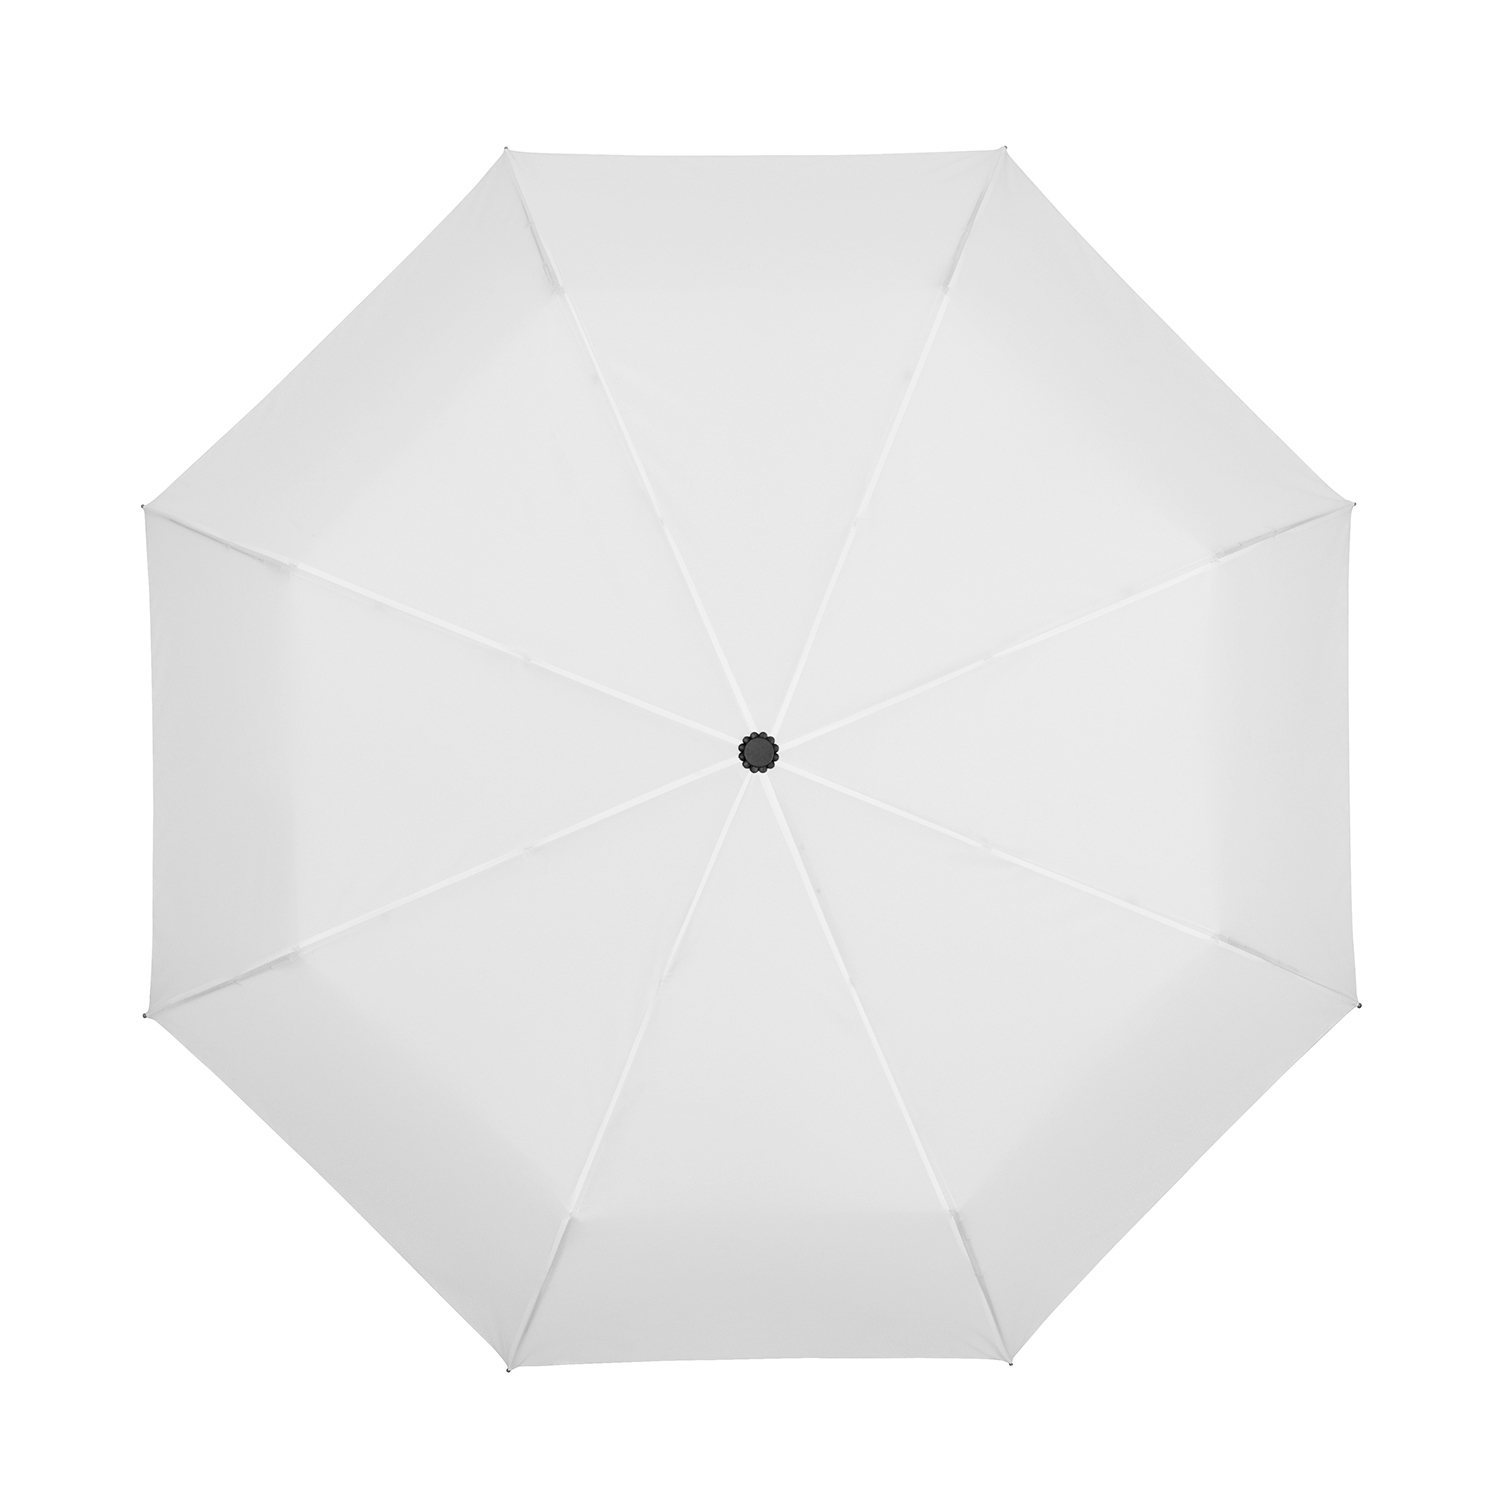 All-Over Print Automatic Umbrella - Print On Demand | HugePOD-1